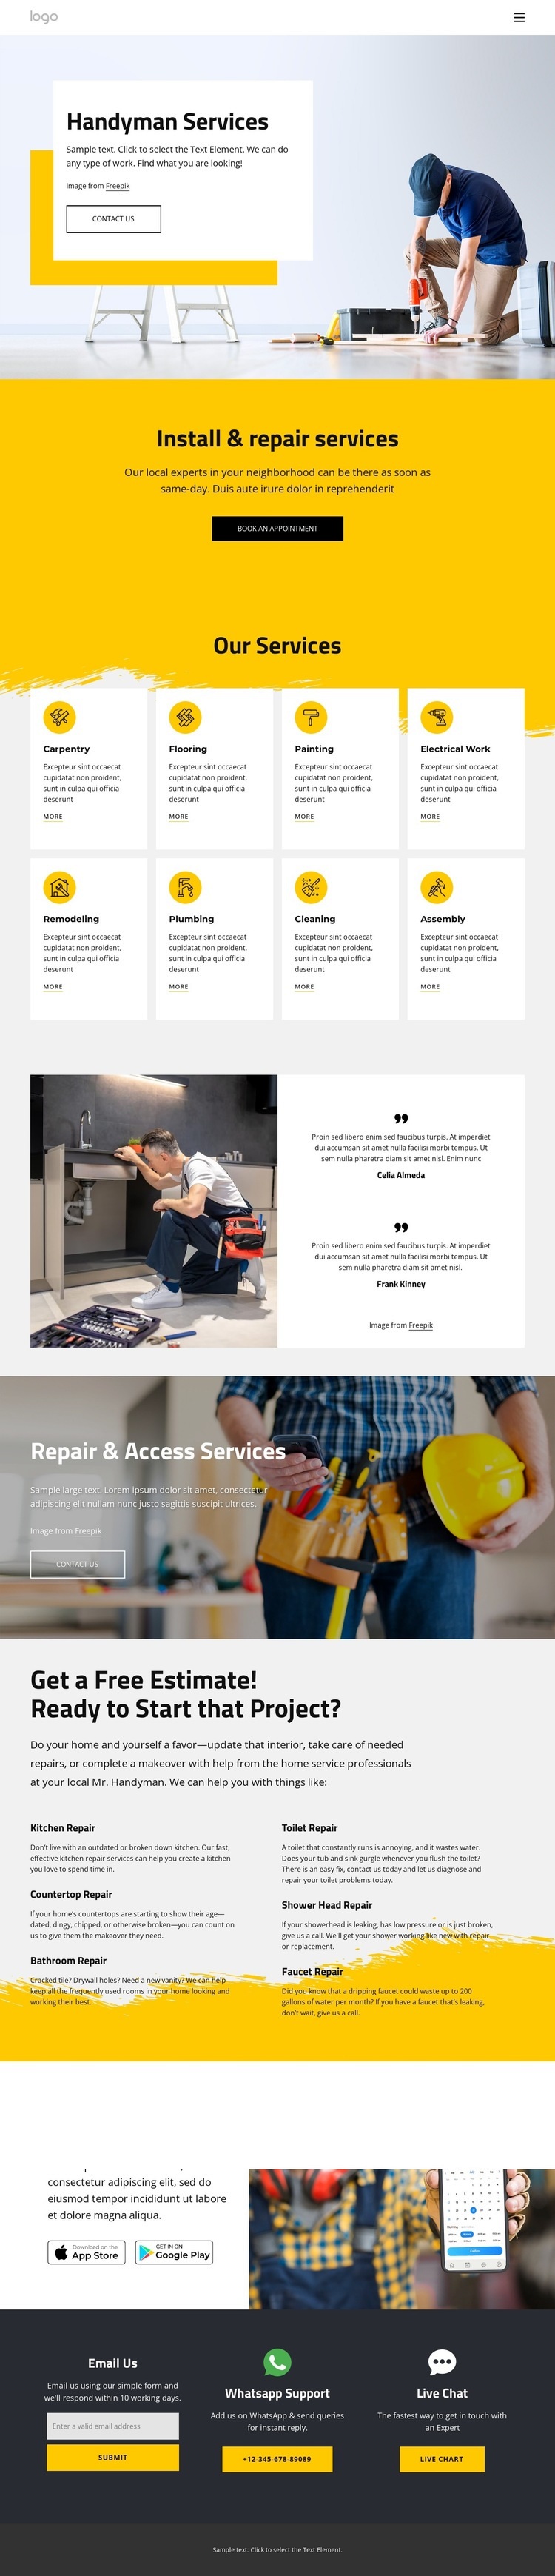 Handyman services Web Page Design